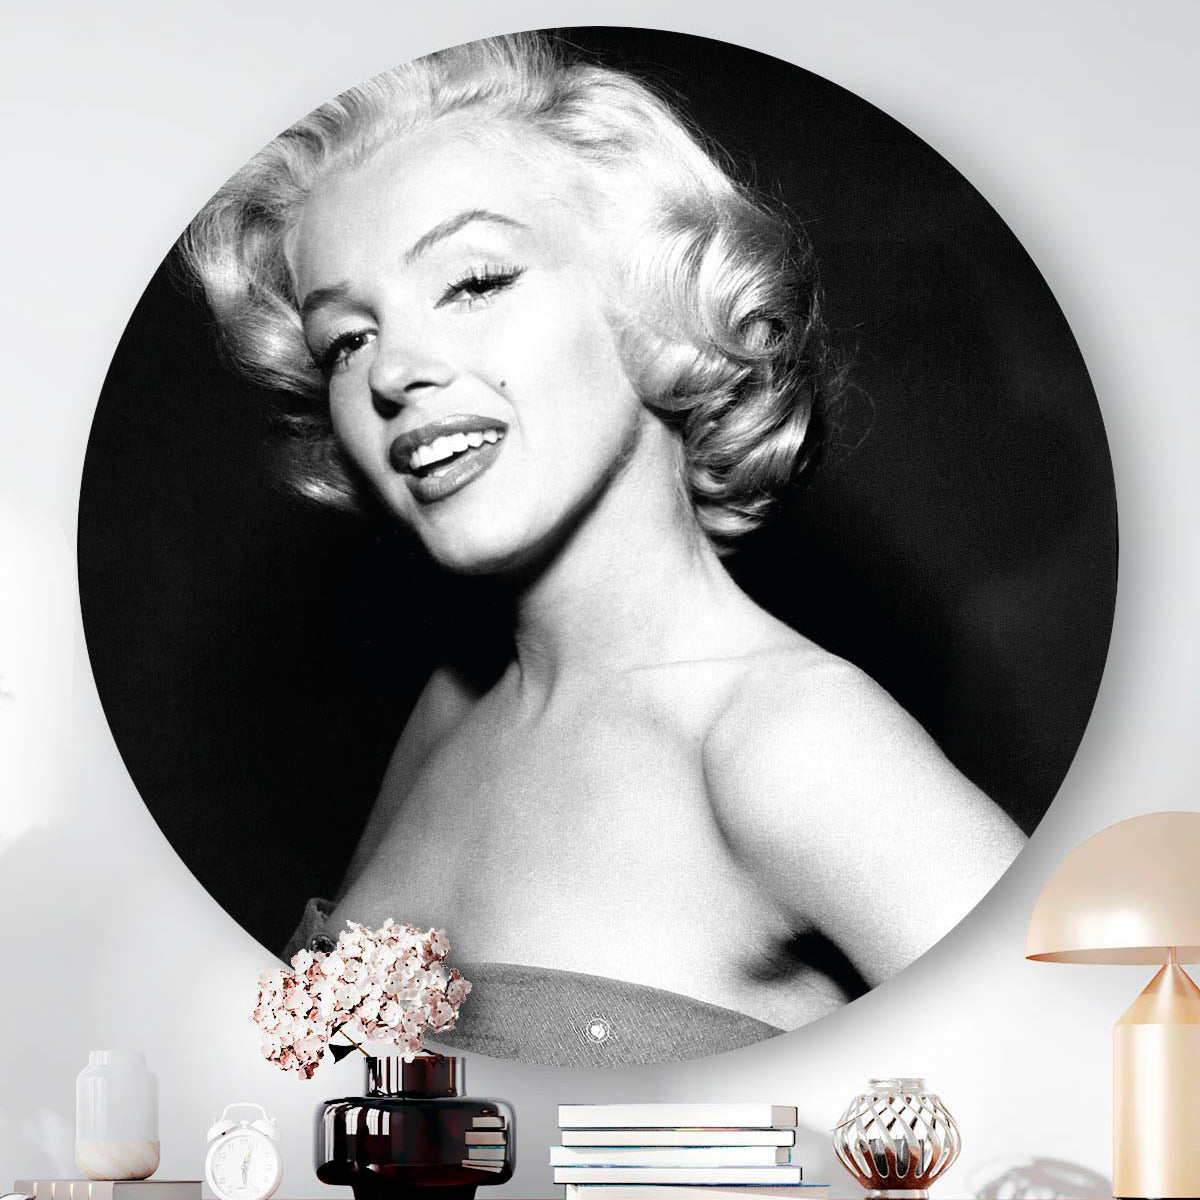 Wanddecoratie met Marilyn Monroe, gestyled met assecoires.